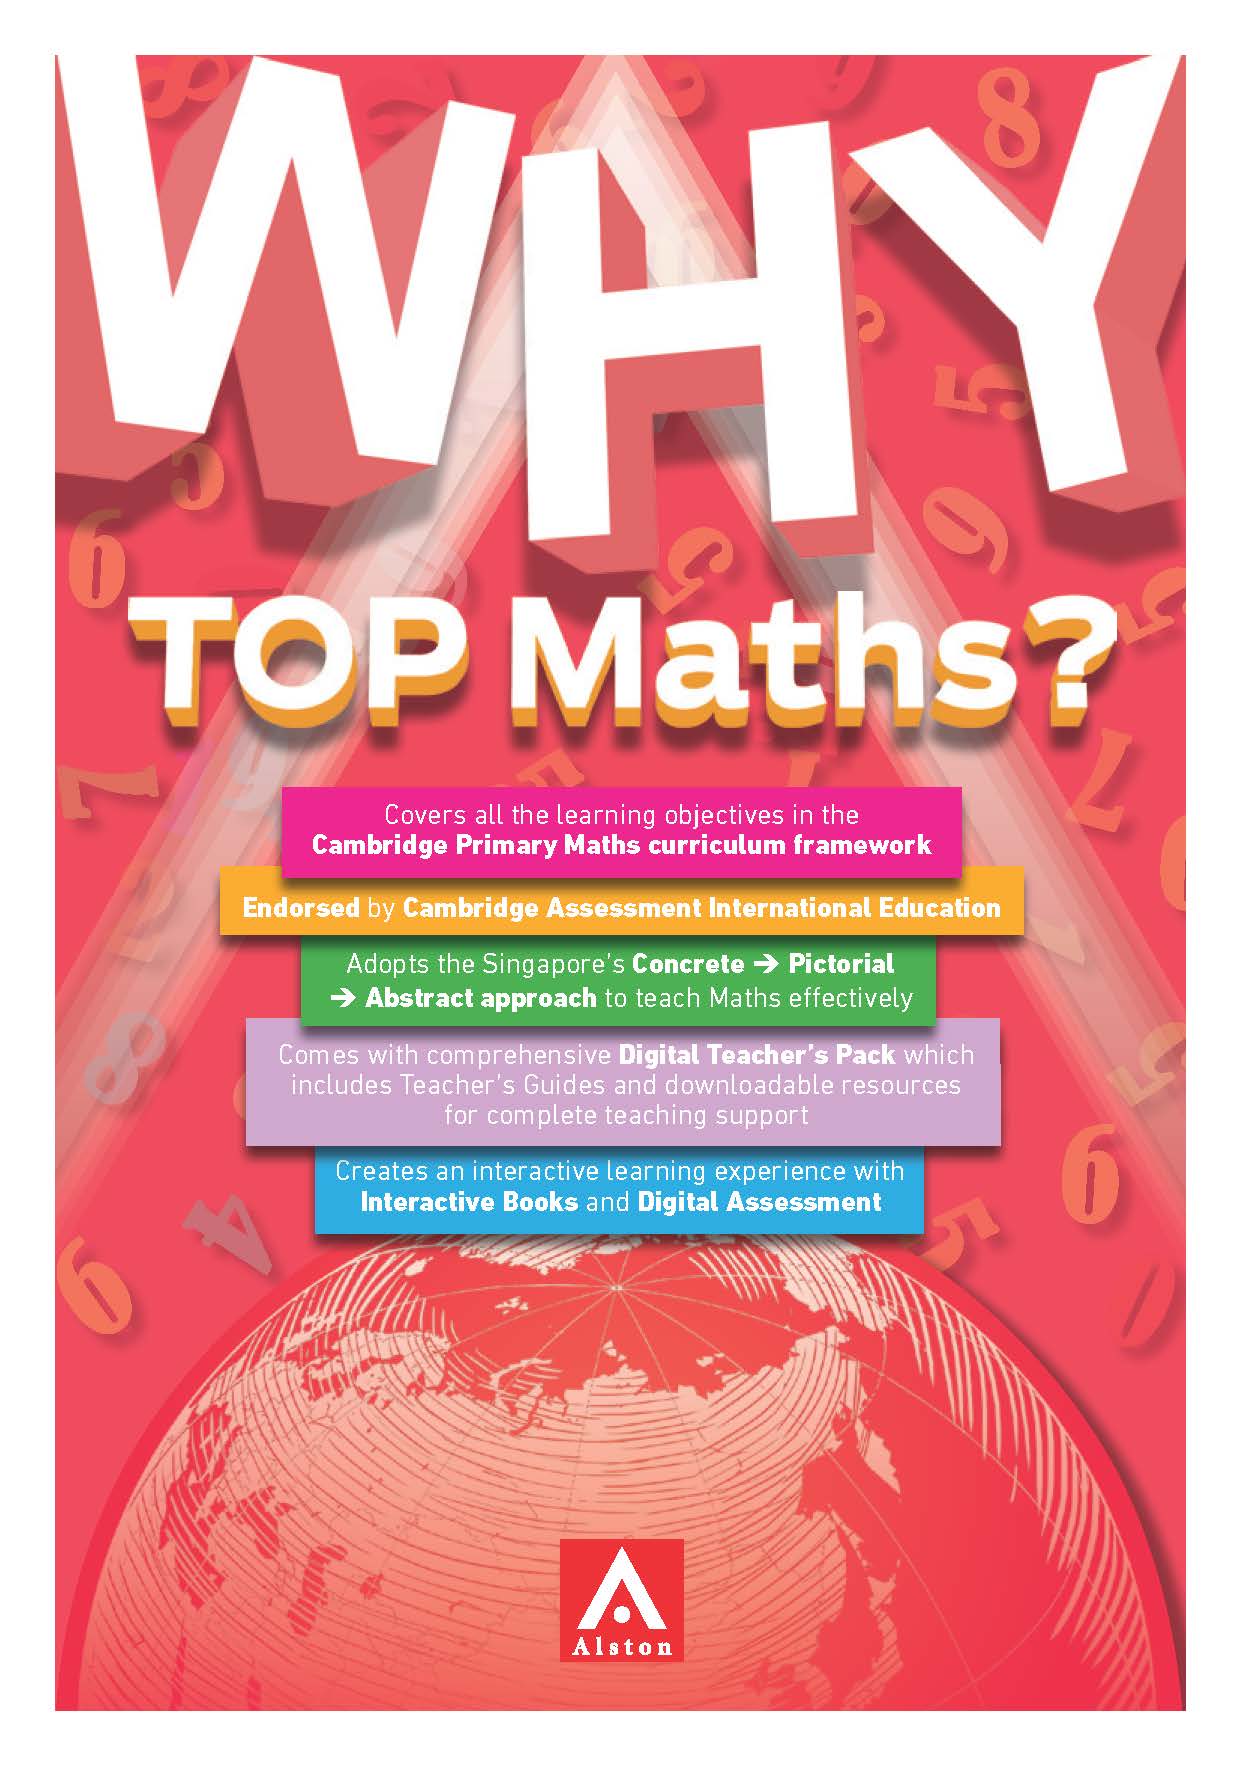 Alston 2019 TOP Maths Flyer Cover